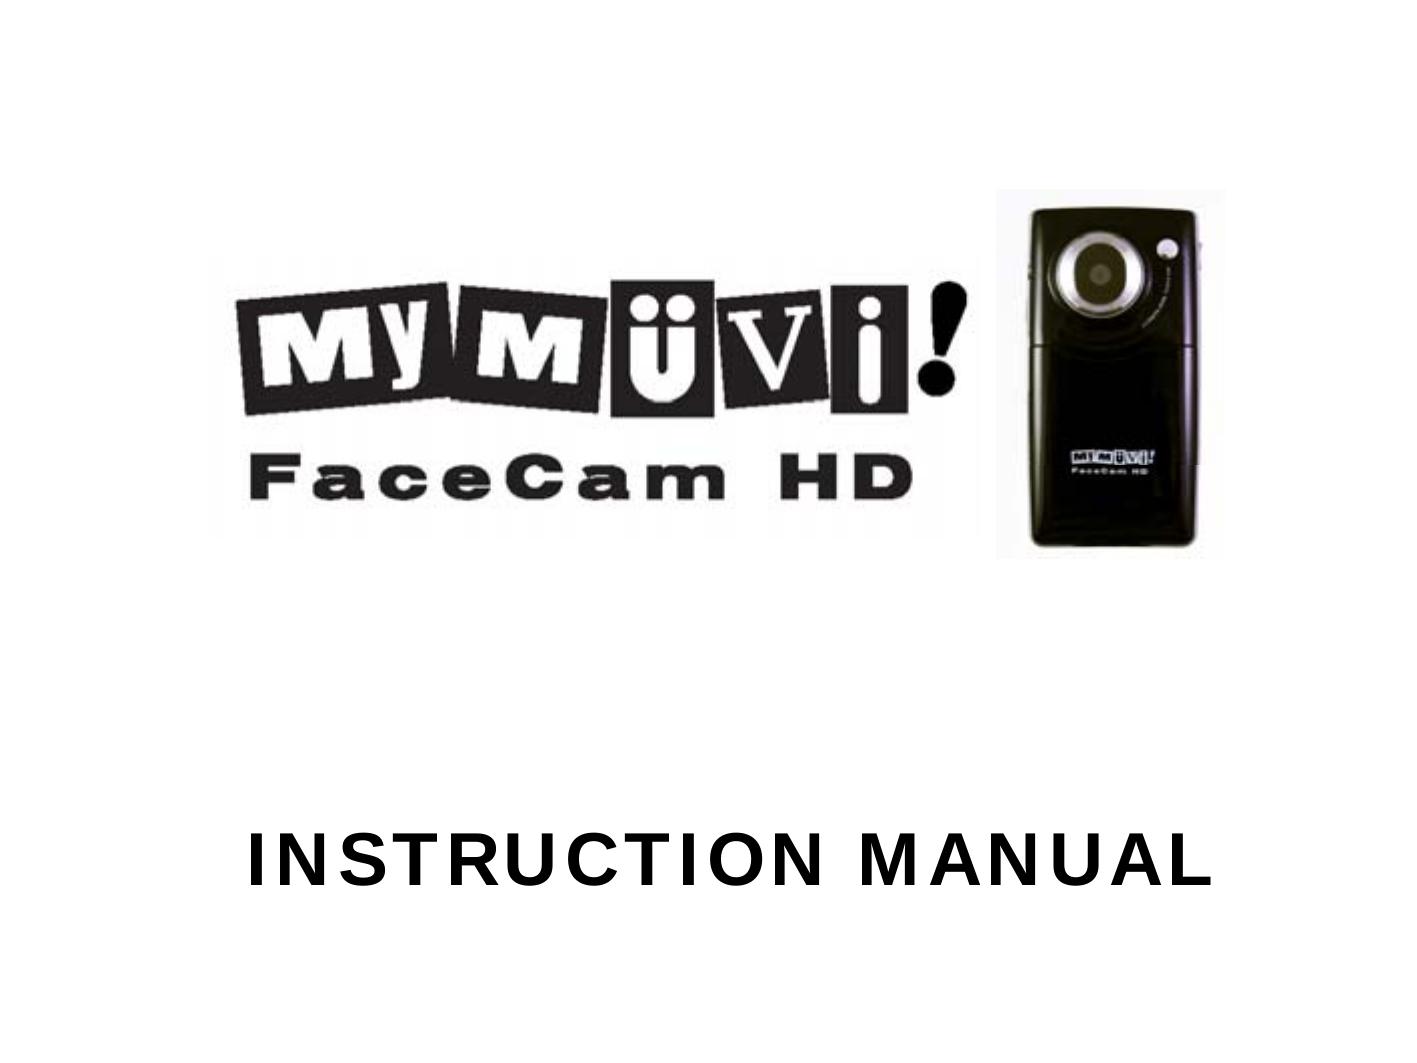 ProMaster MyMuvi Movie Machine Camcorder User Manual